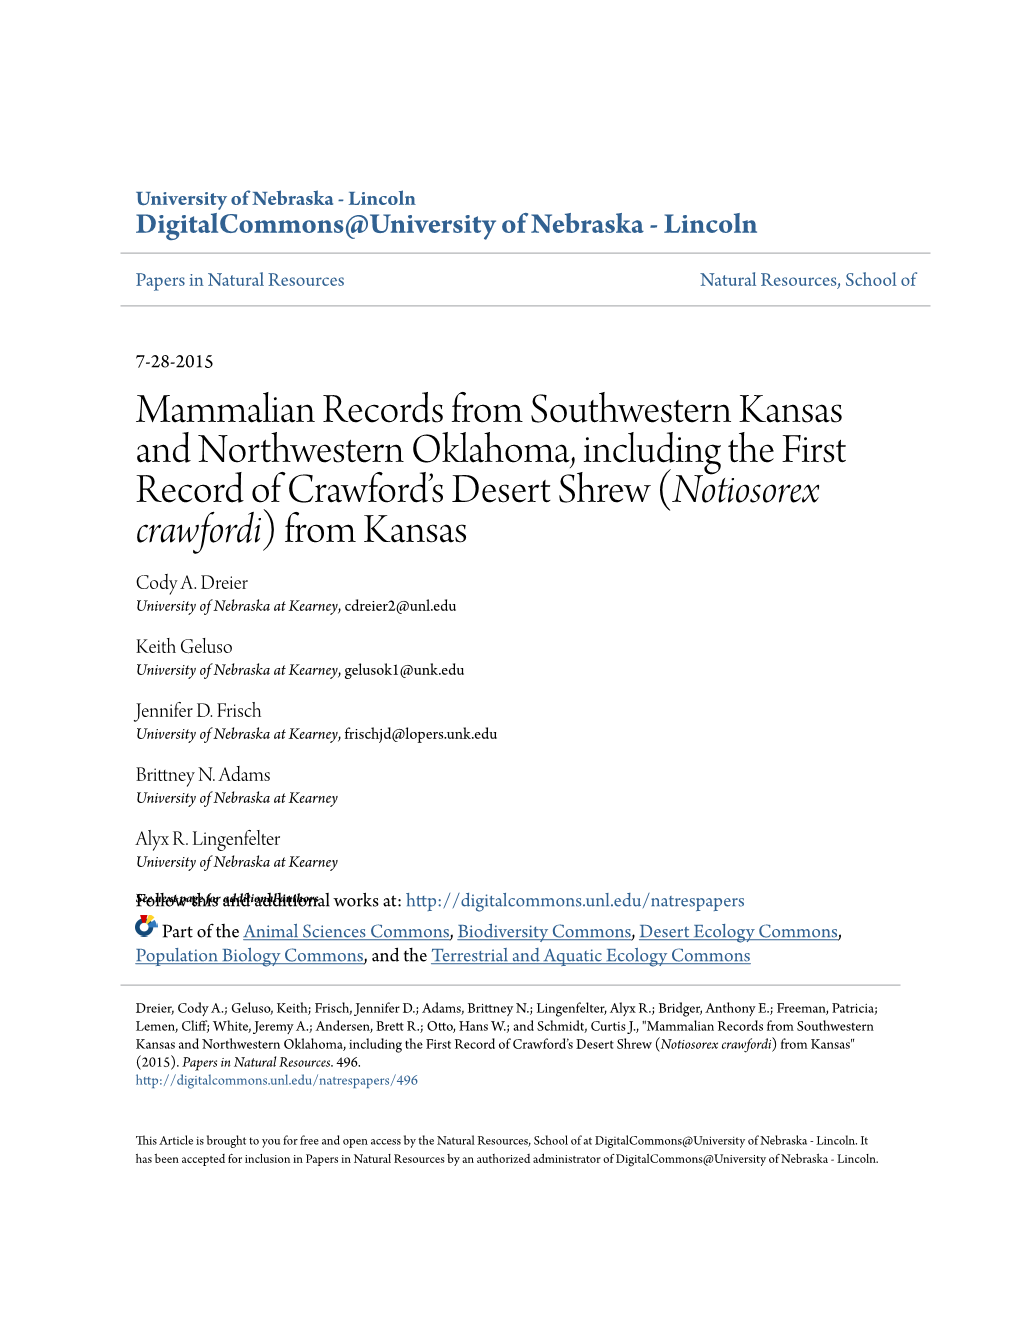 Mammalian Records from Southwestern Kansas and Northwestern Oklahoma, Including the First Record of Crawford’S Desert Shrew (Notiosorex Crawfordi) from Kansas Cody A